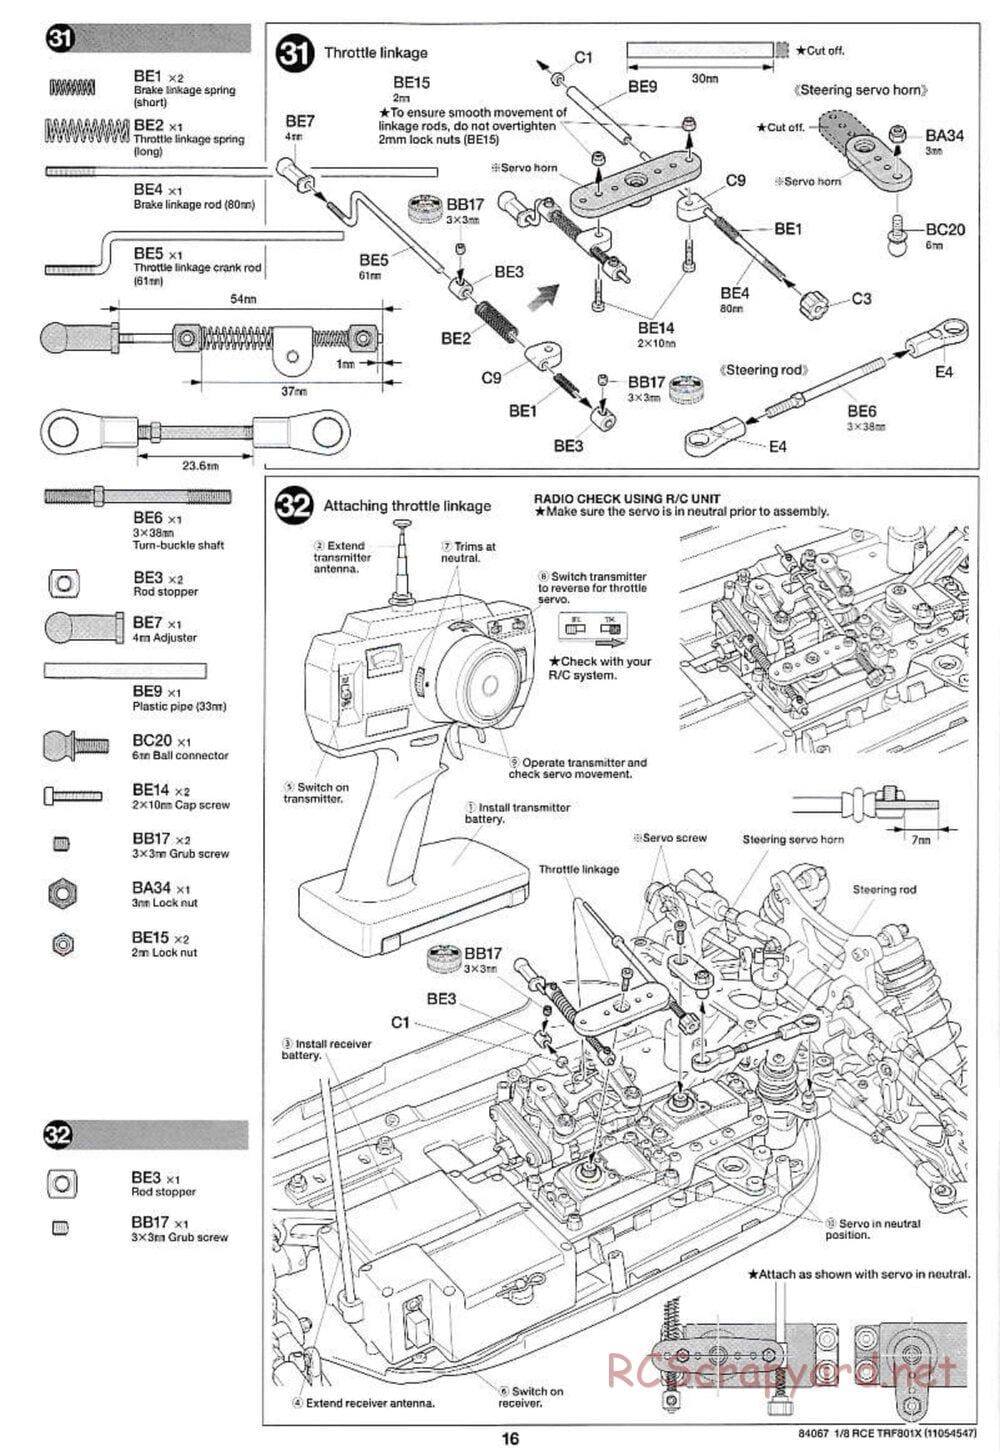 Tamiya - TRF801X Chassis - Manual - Page 16